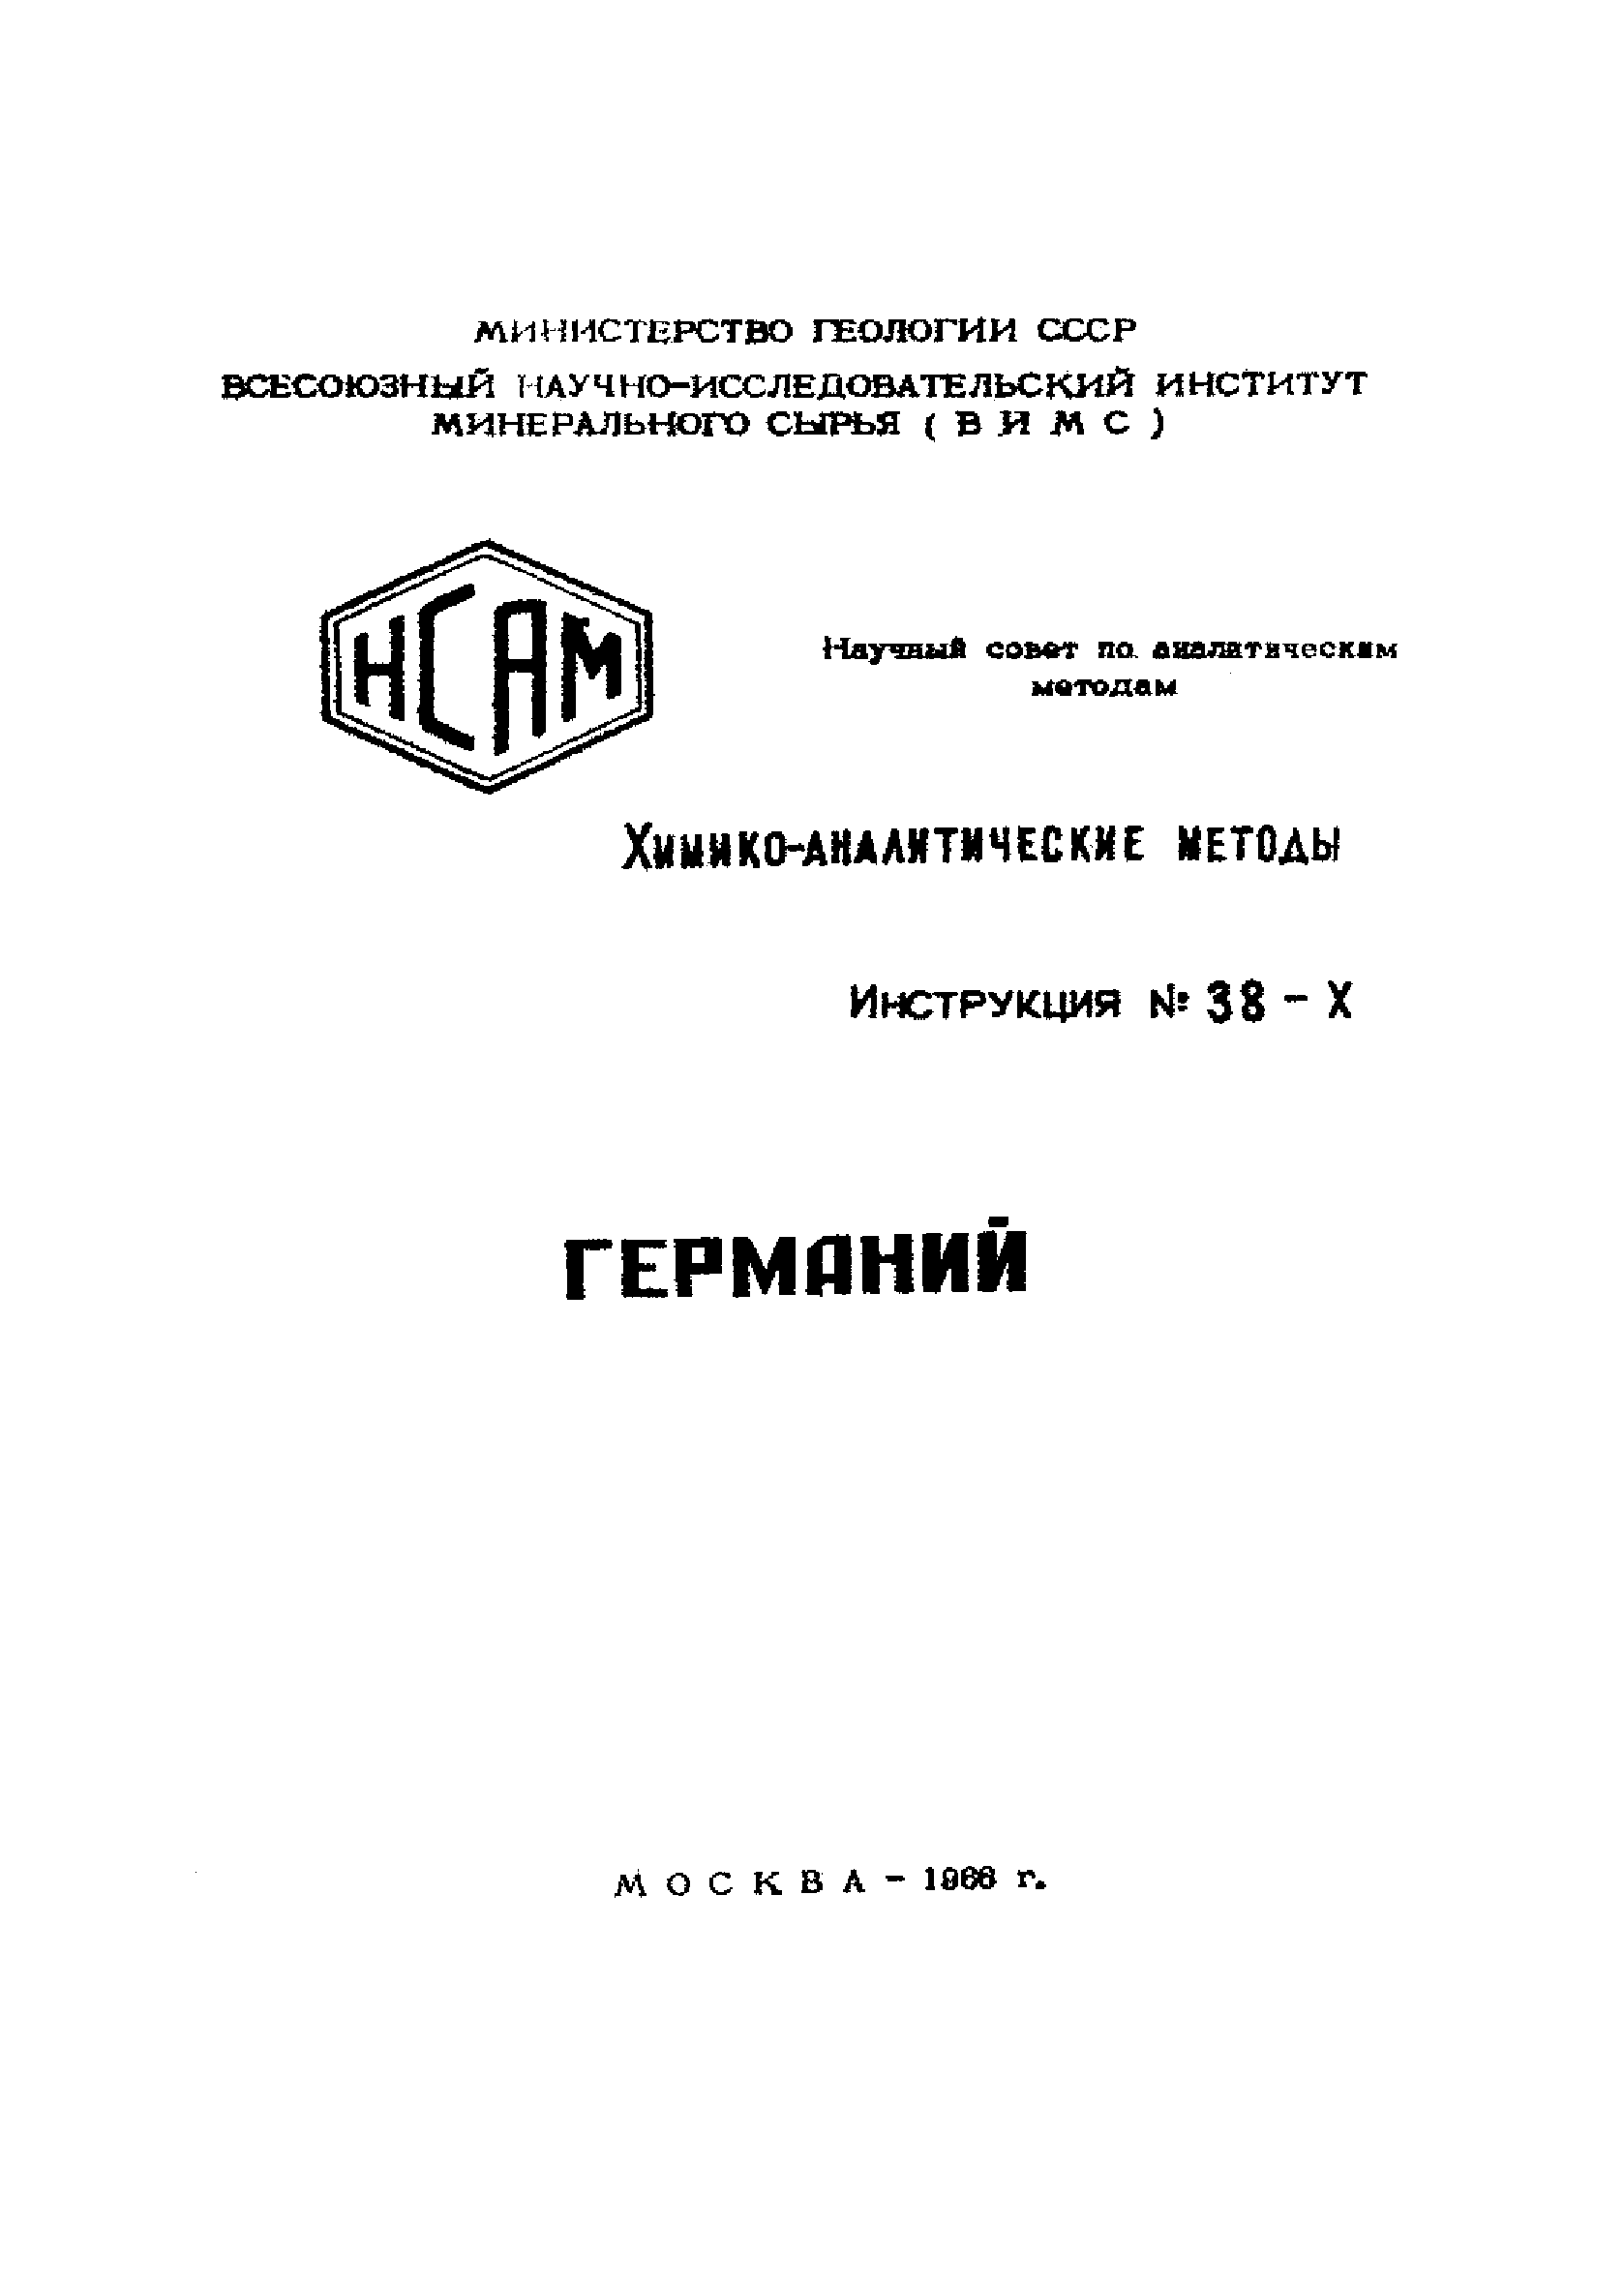 Инструкция НСАМ 38-Х